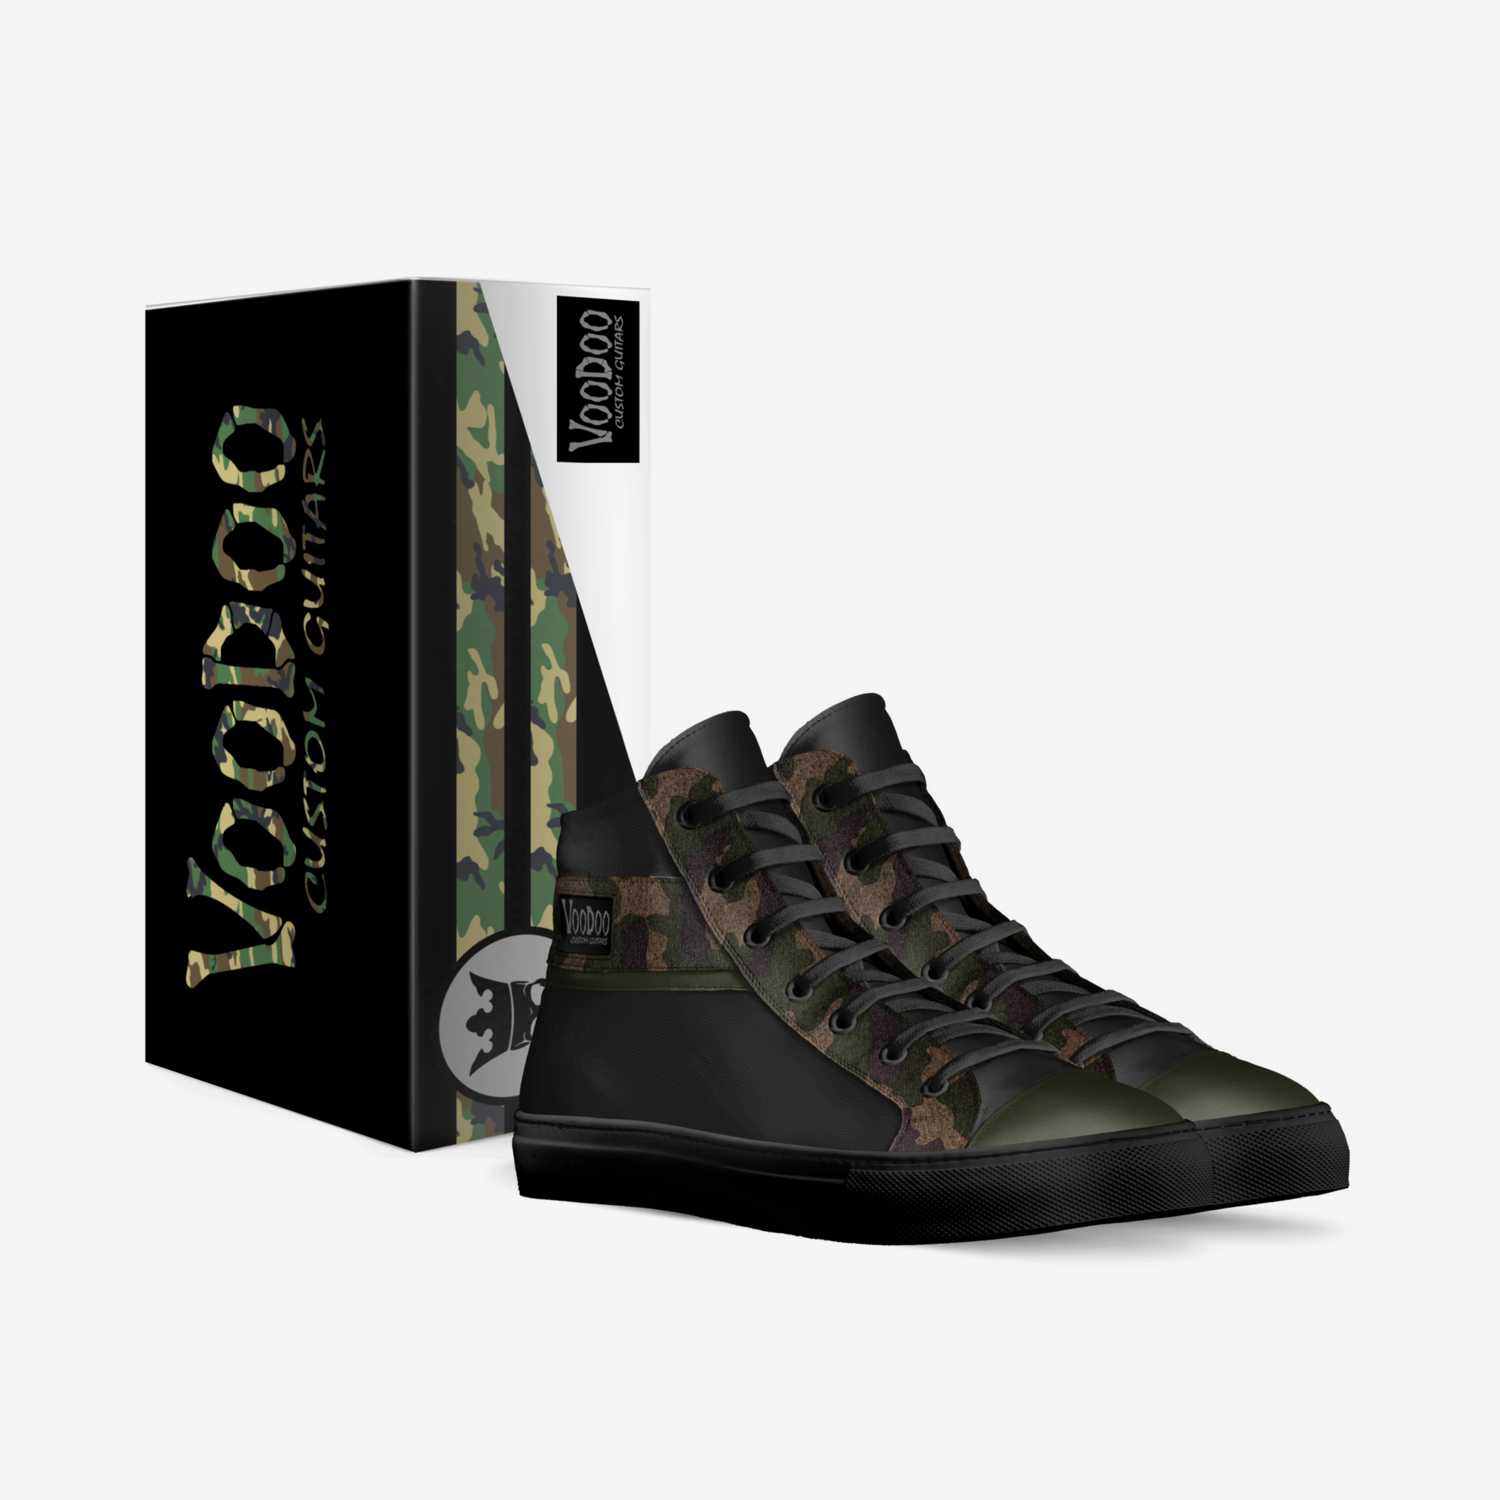 Worriorz custom made in Italy shoes by Voodoo Custom Guitars | Box view